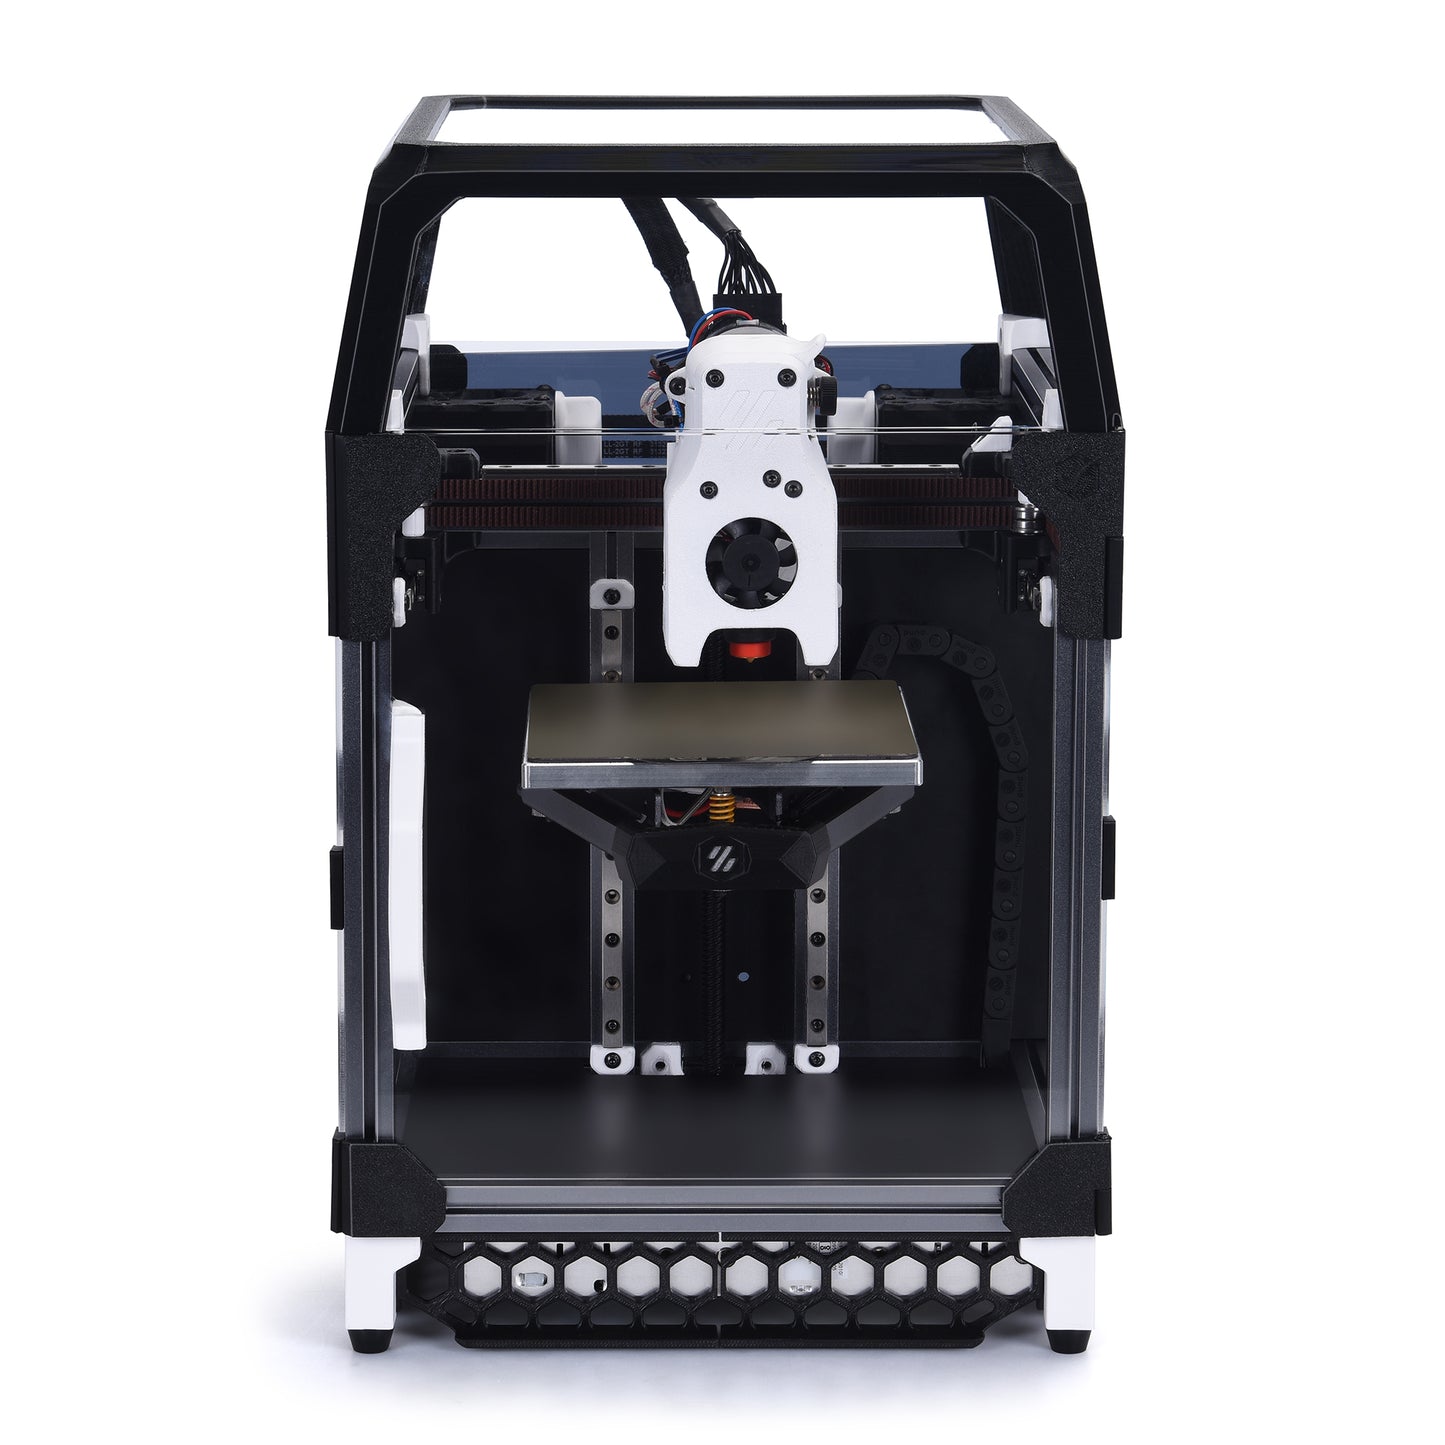 LDO Voron V0-S1 Printer Kit